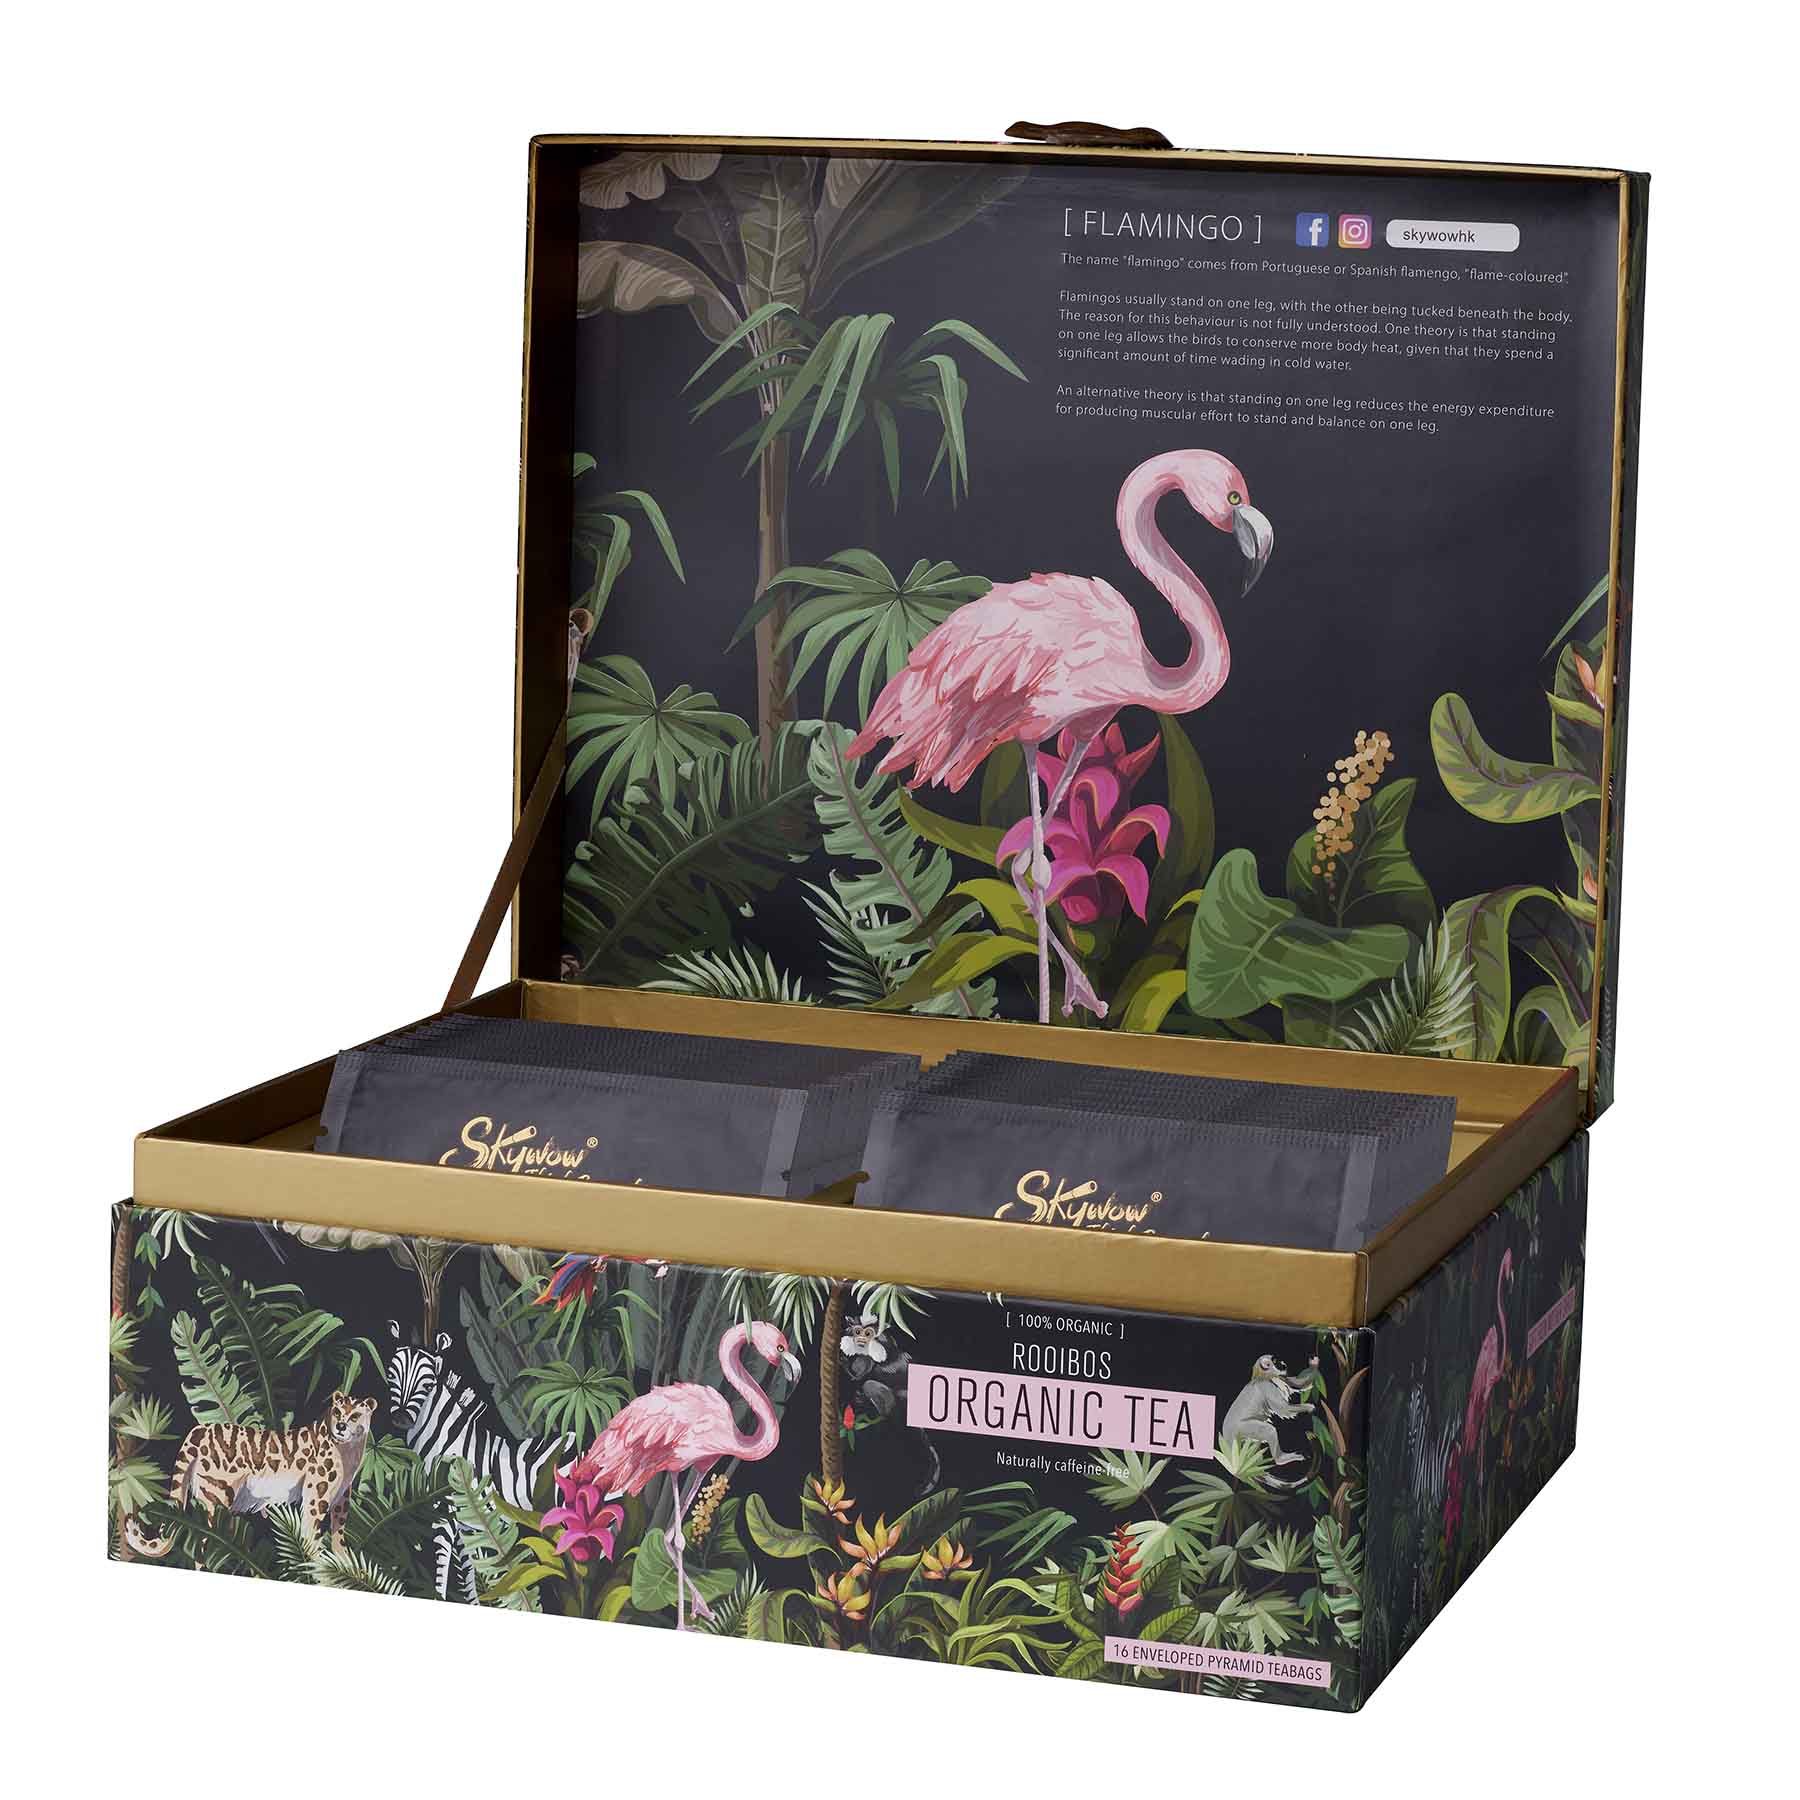 Skywow Organic Rooibos Tea gift box, Individually packed pyramid teabags